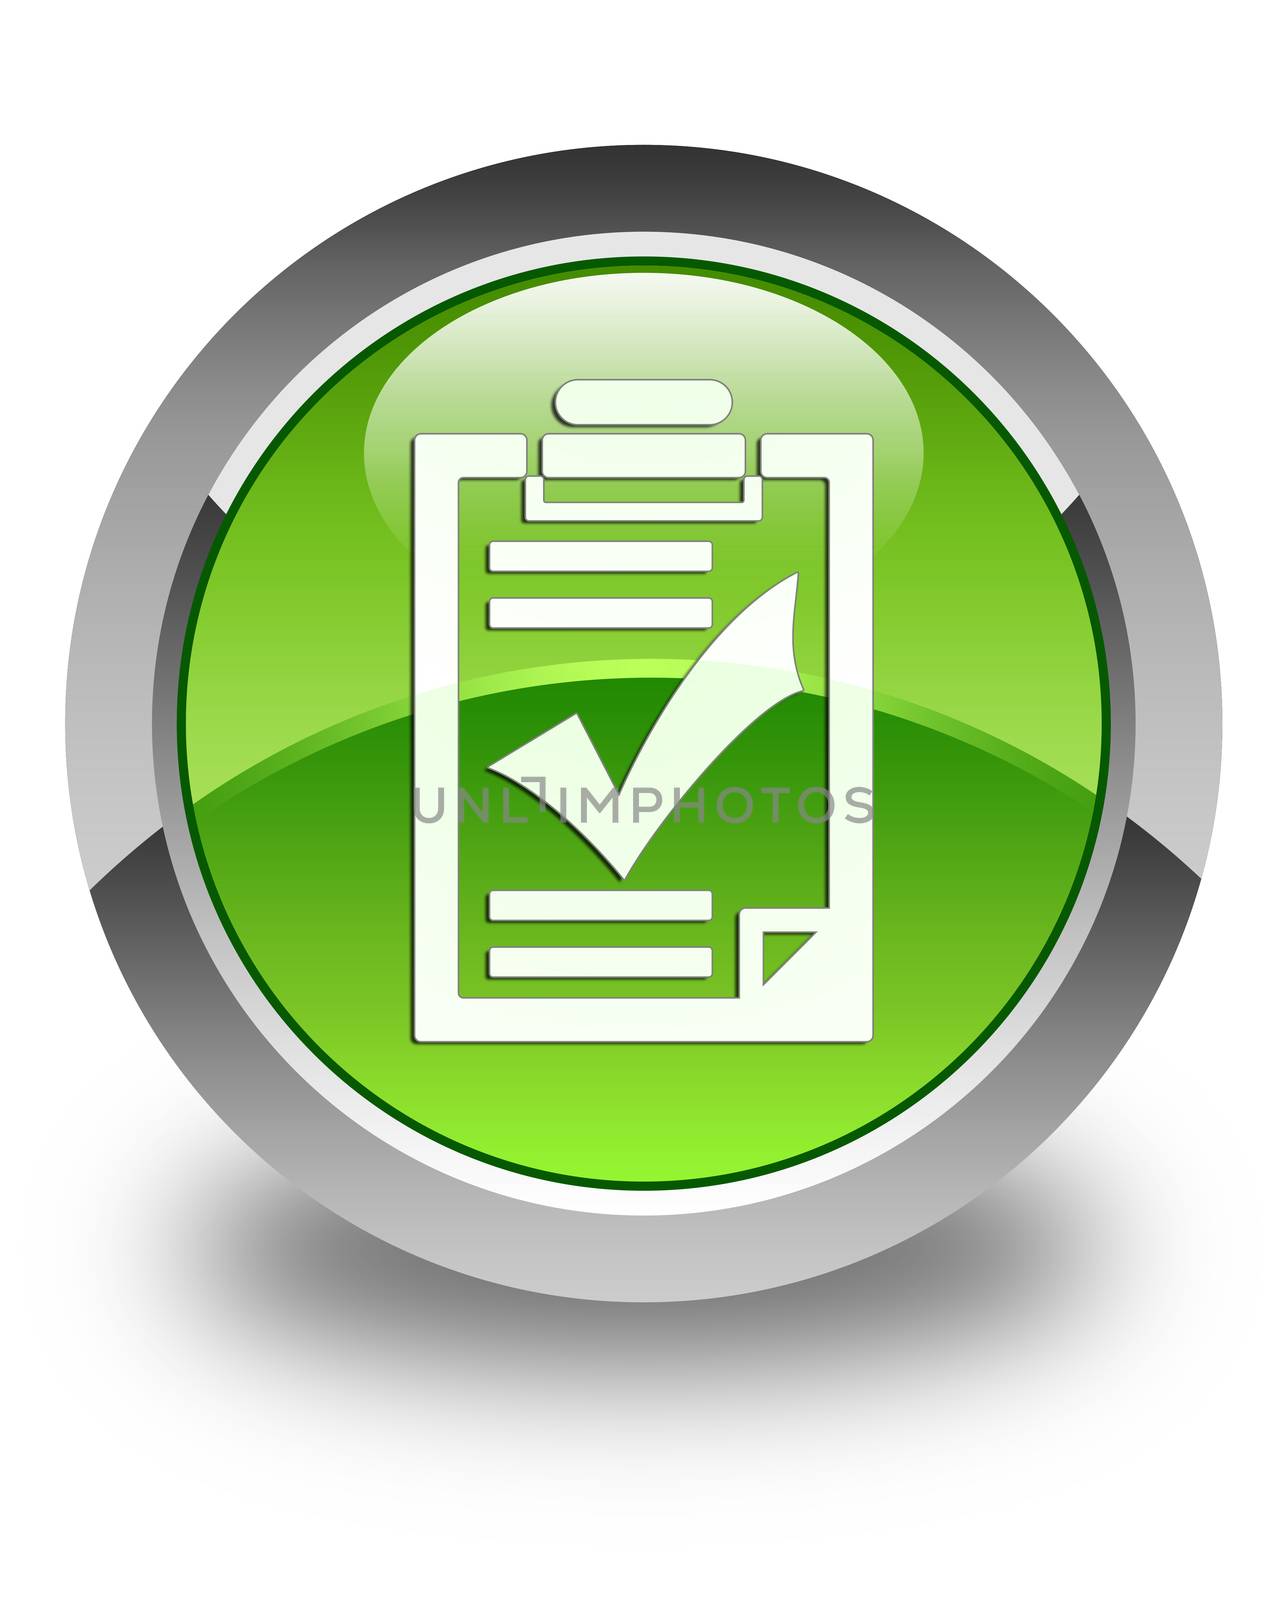 Checklist icon on glossy green round button